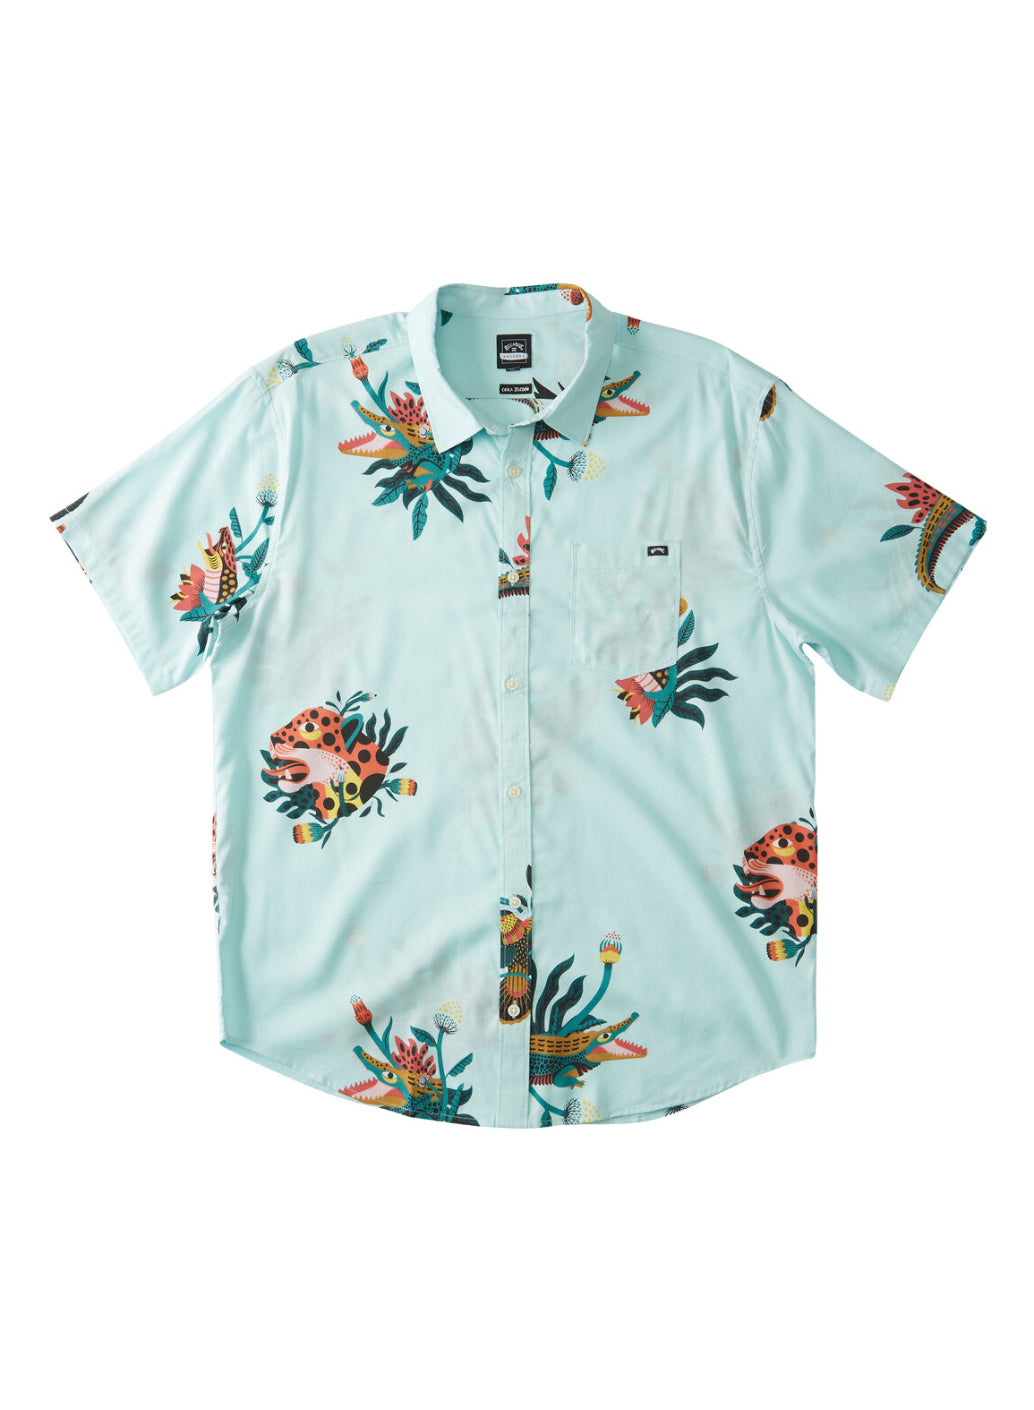 Billabong Zeledon Sundays Short Sleeve Shirt CTL-Coastal M